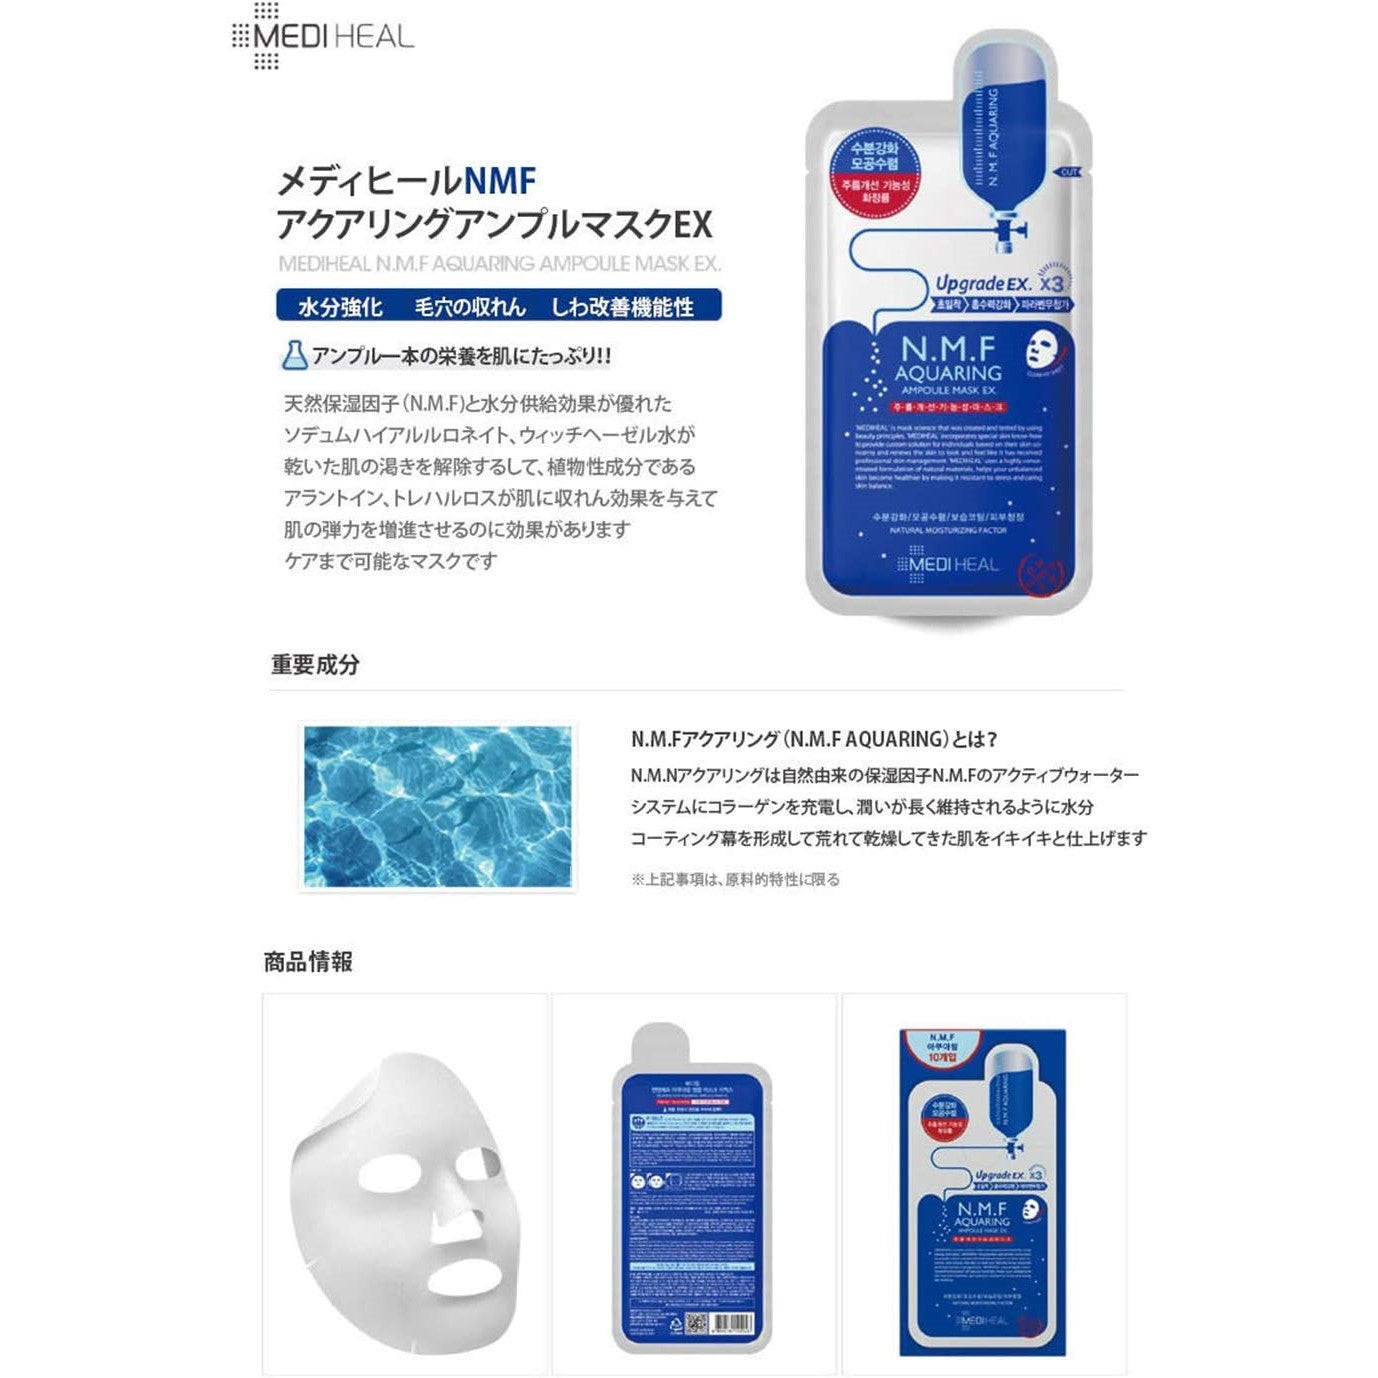 Mediheal N.M.F Aquaring Ampoule Mask EX 5pcs/10pcs (Made in Korea)